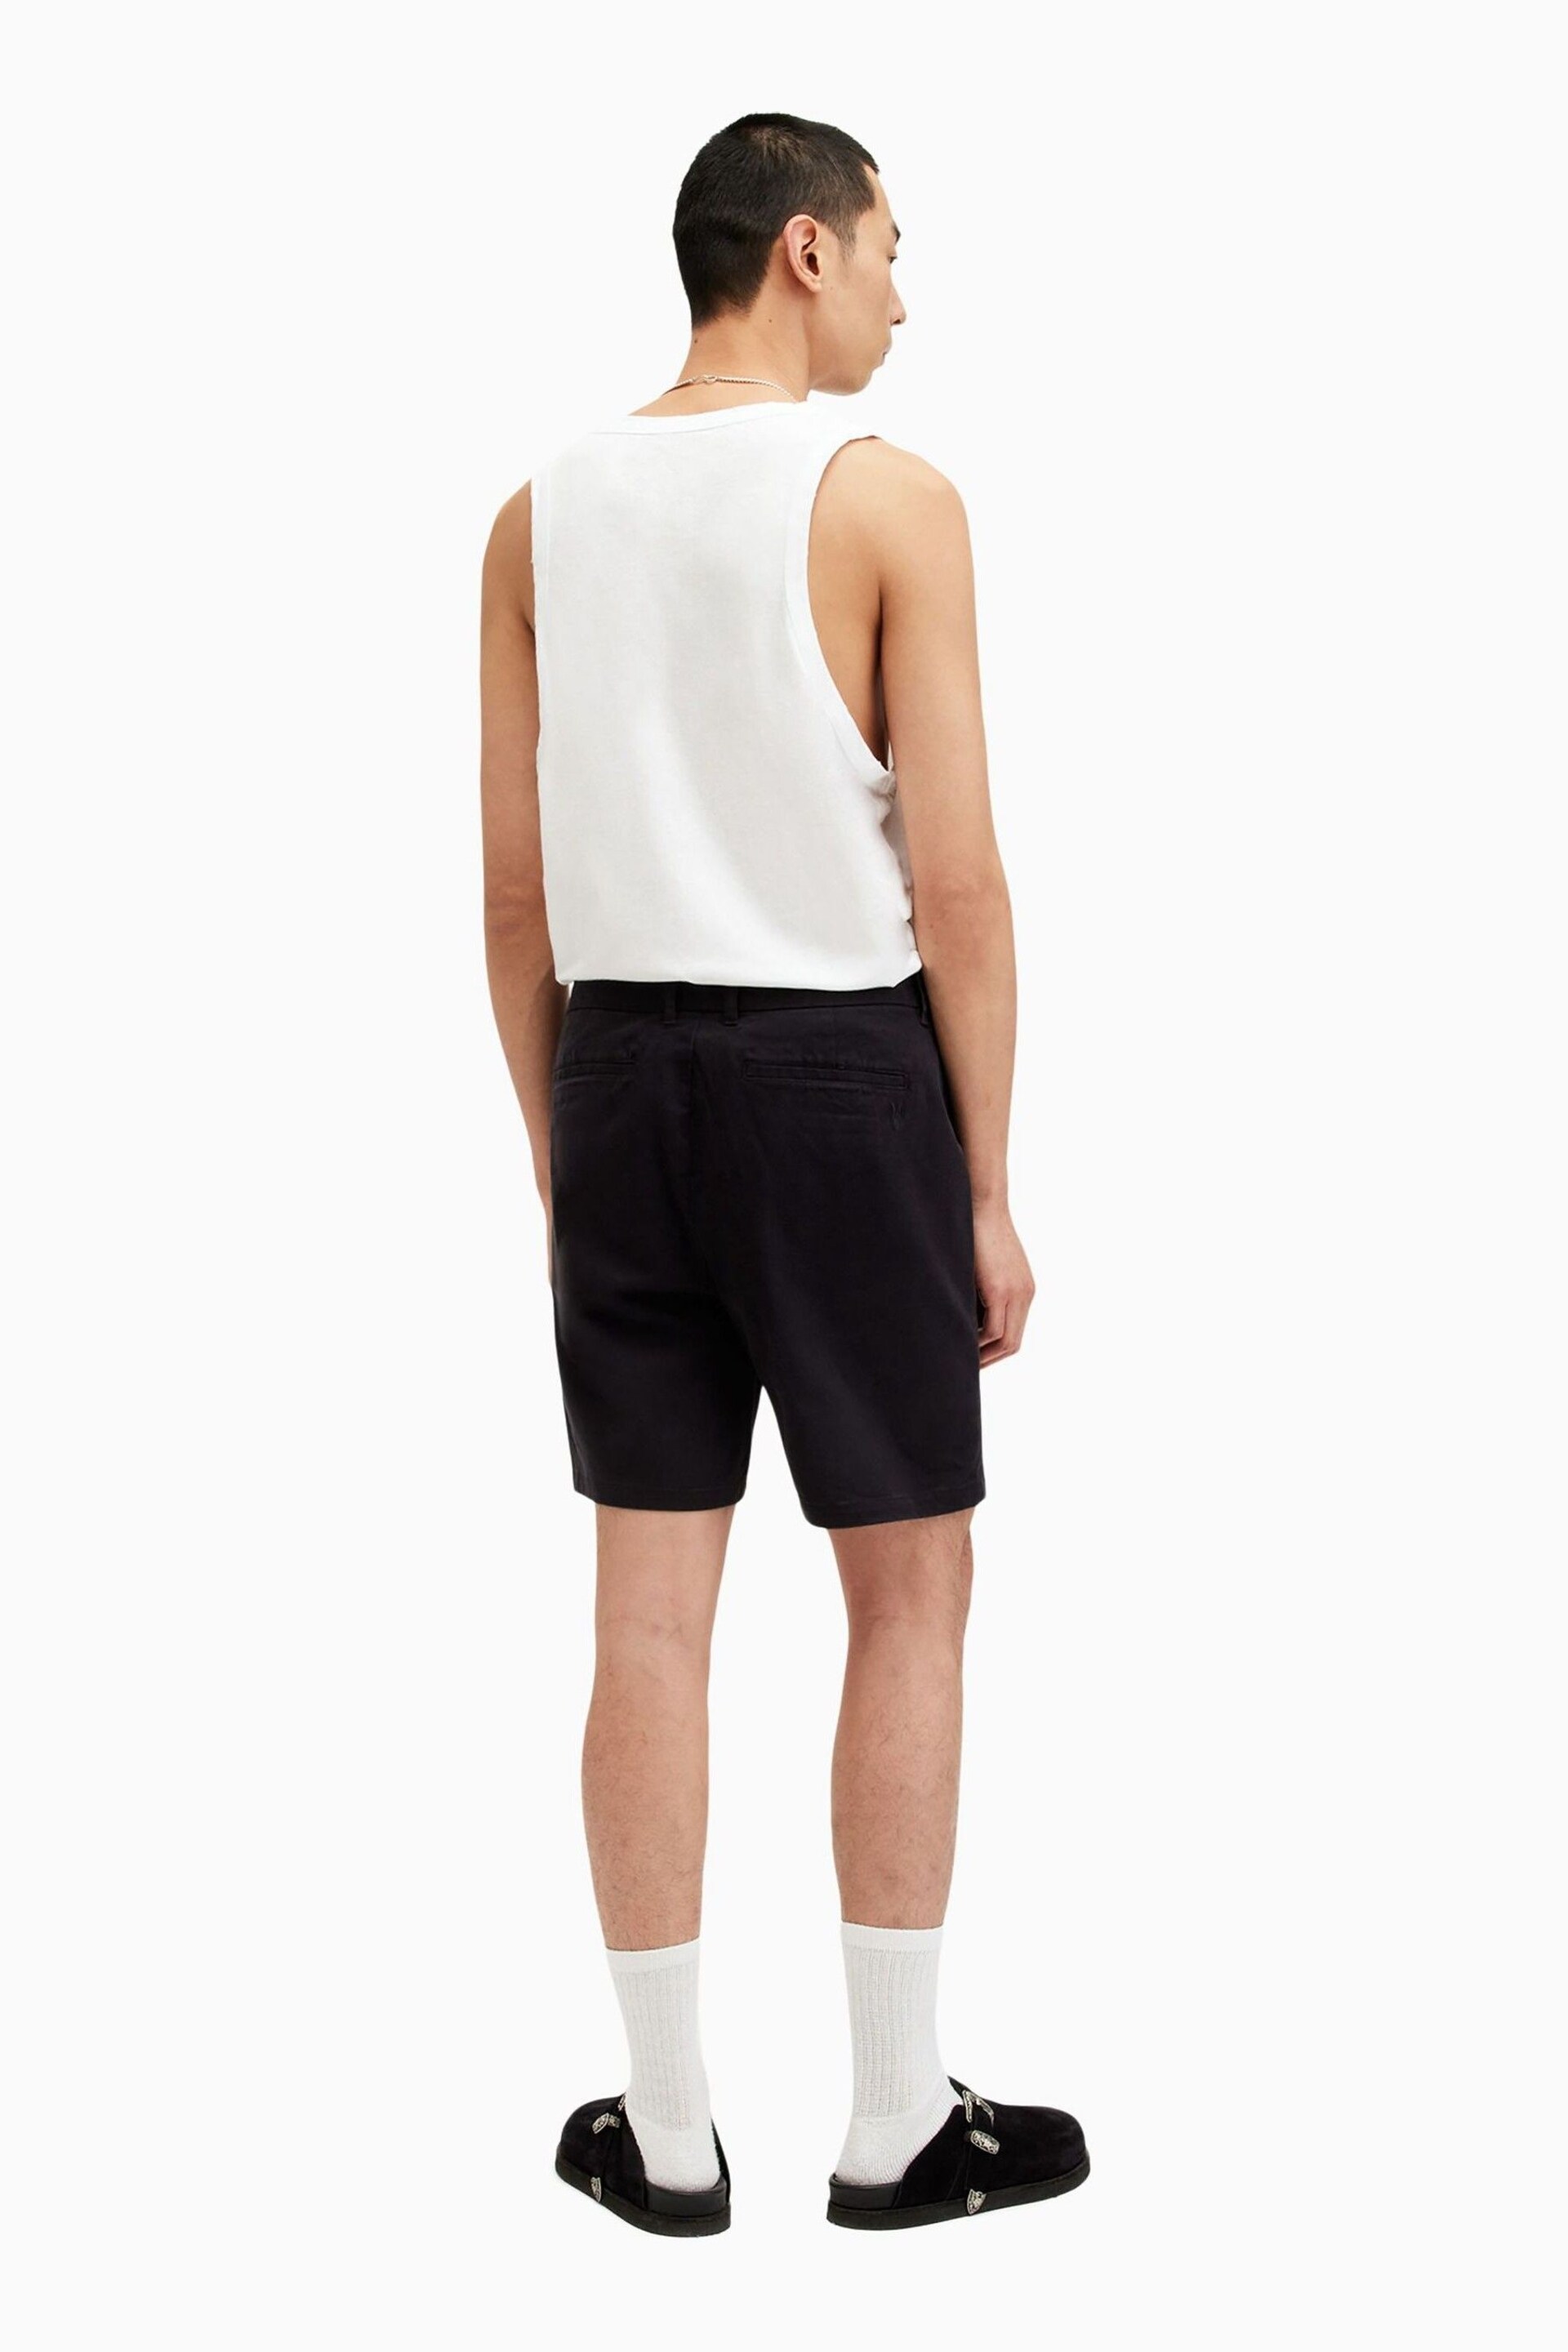 AllSaints Black Neiva Shorts - Image 2 of 7